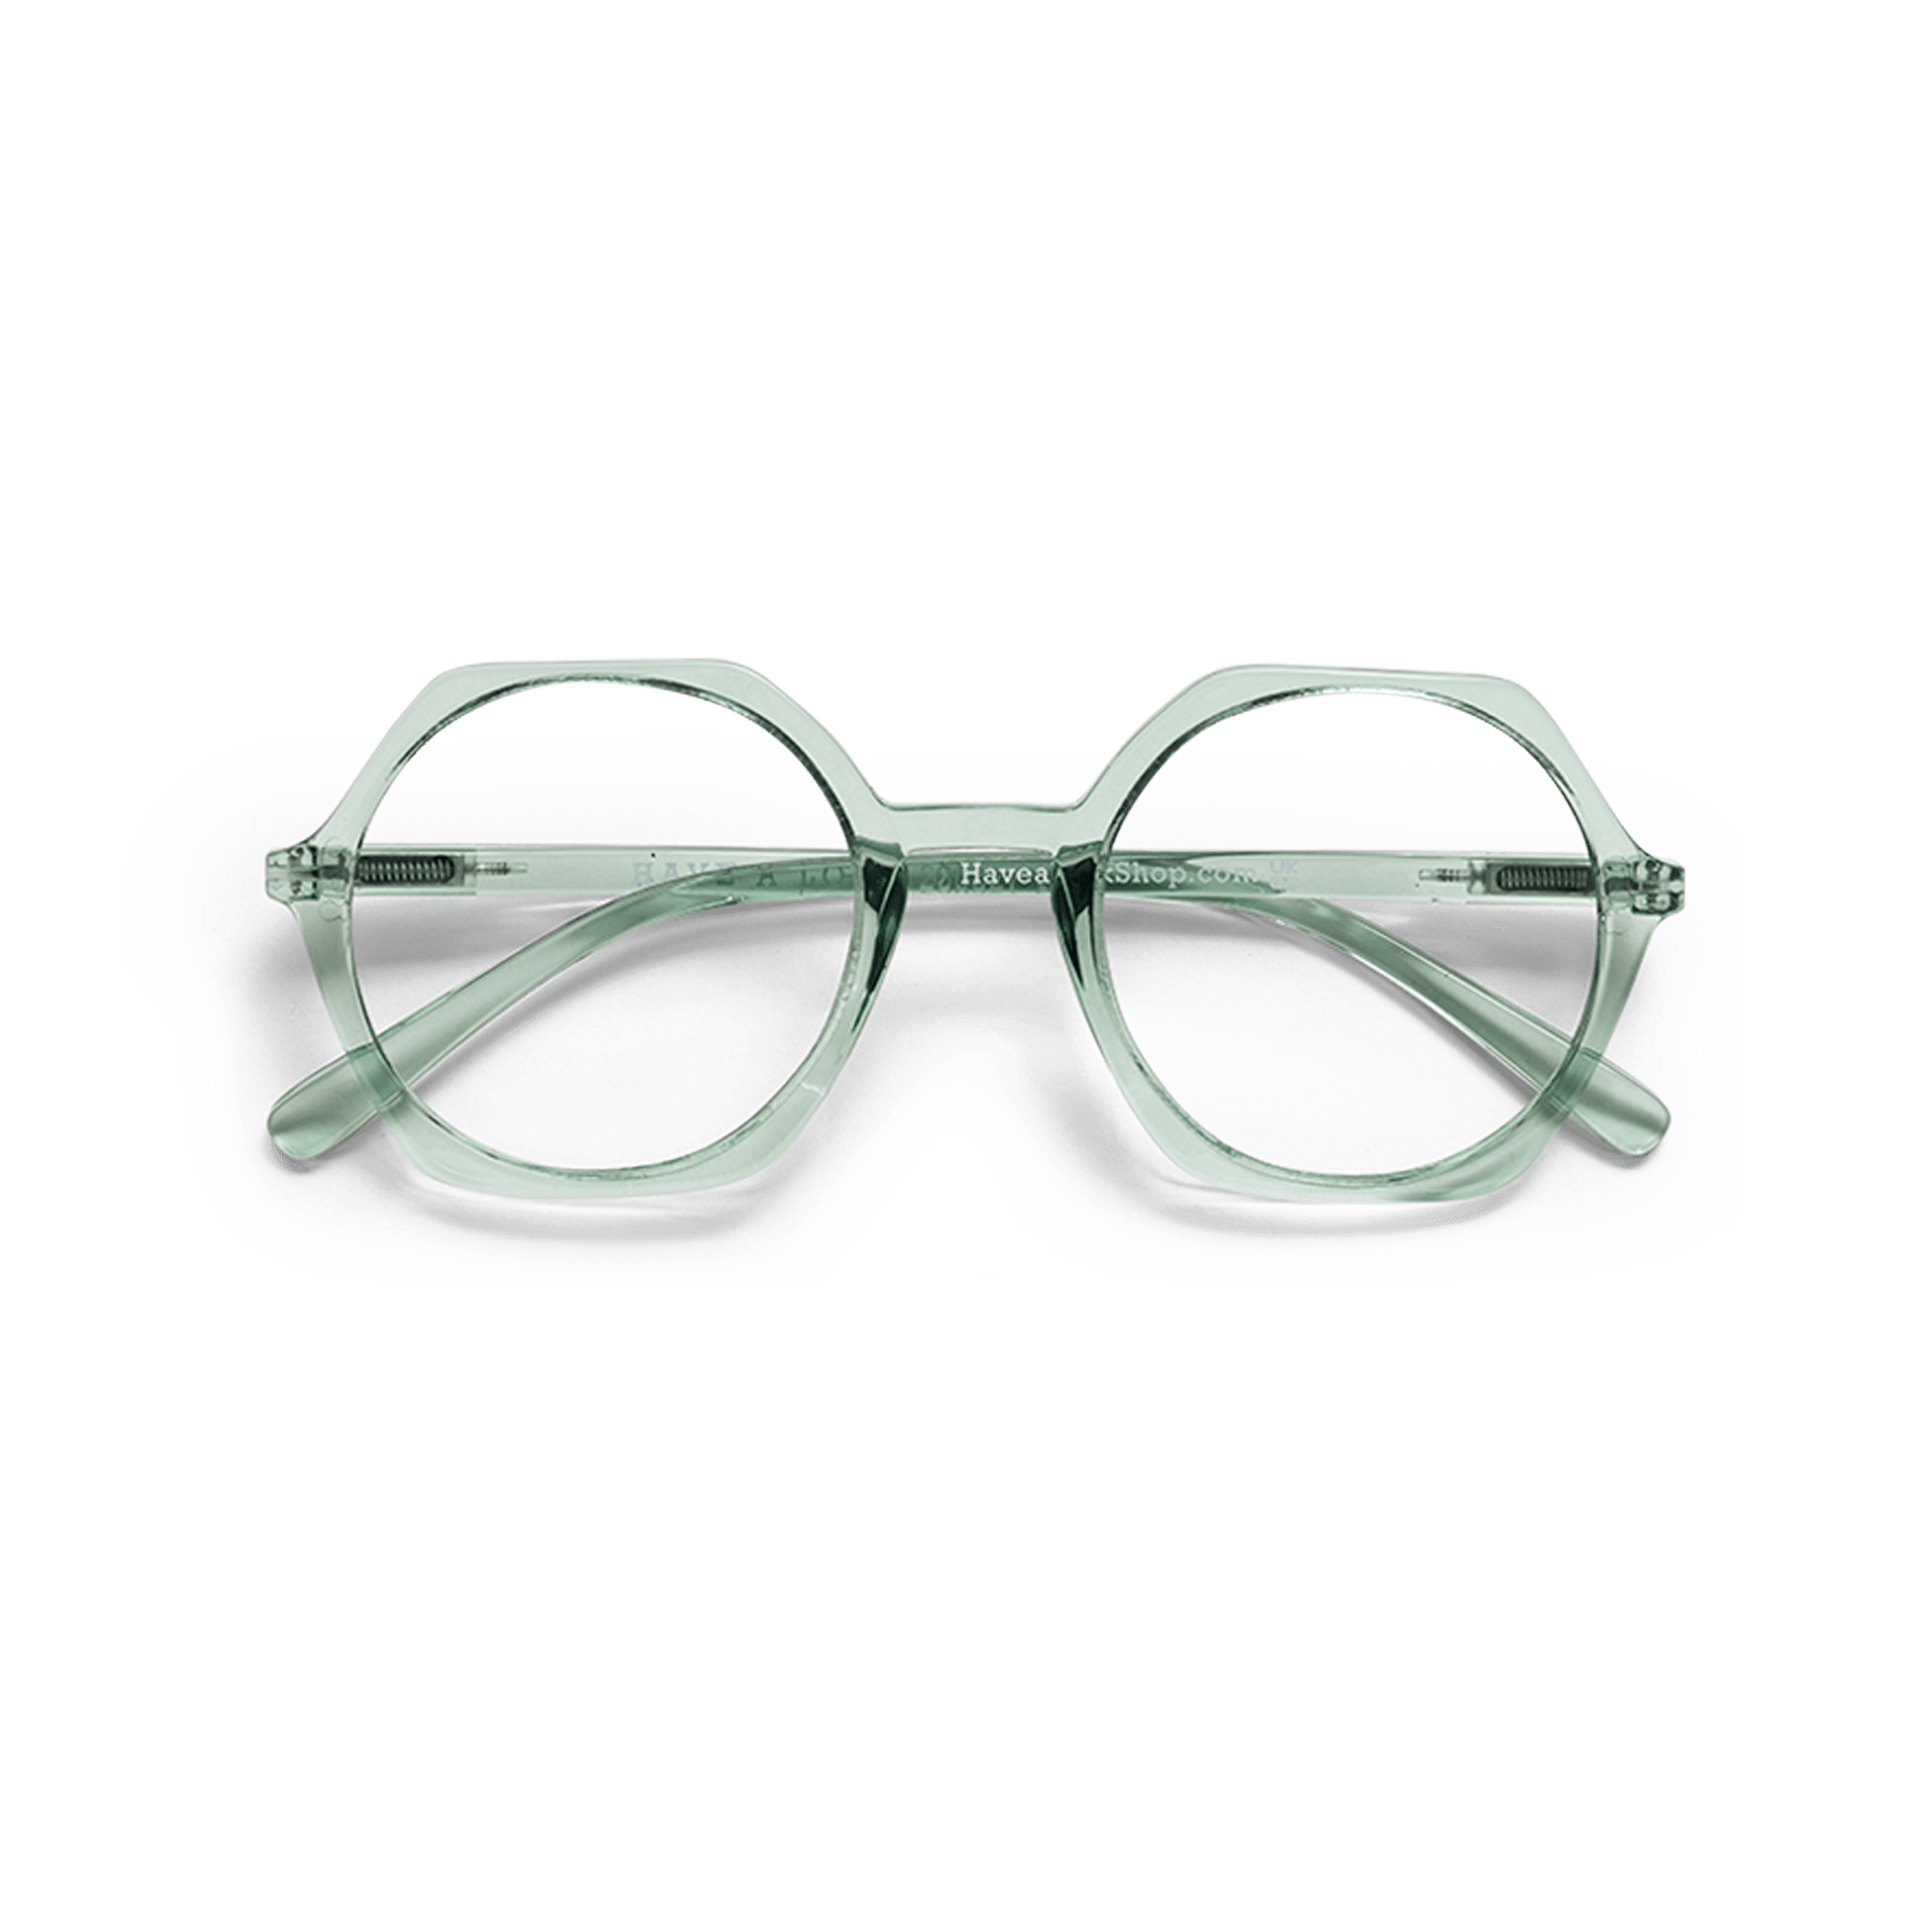 Minusglasögon Edgy - clear green